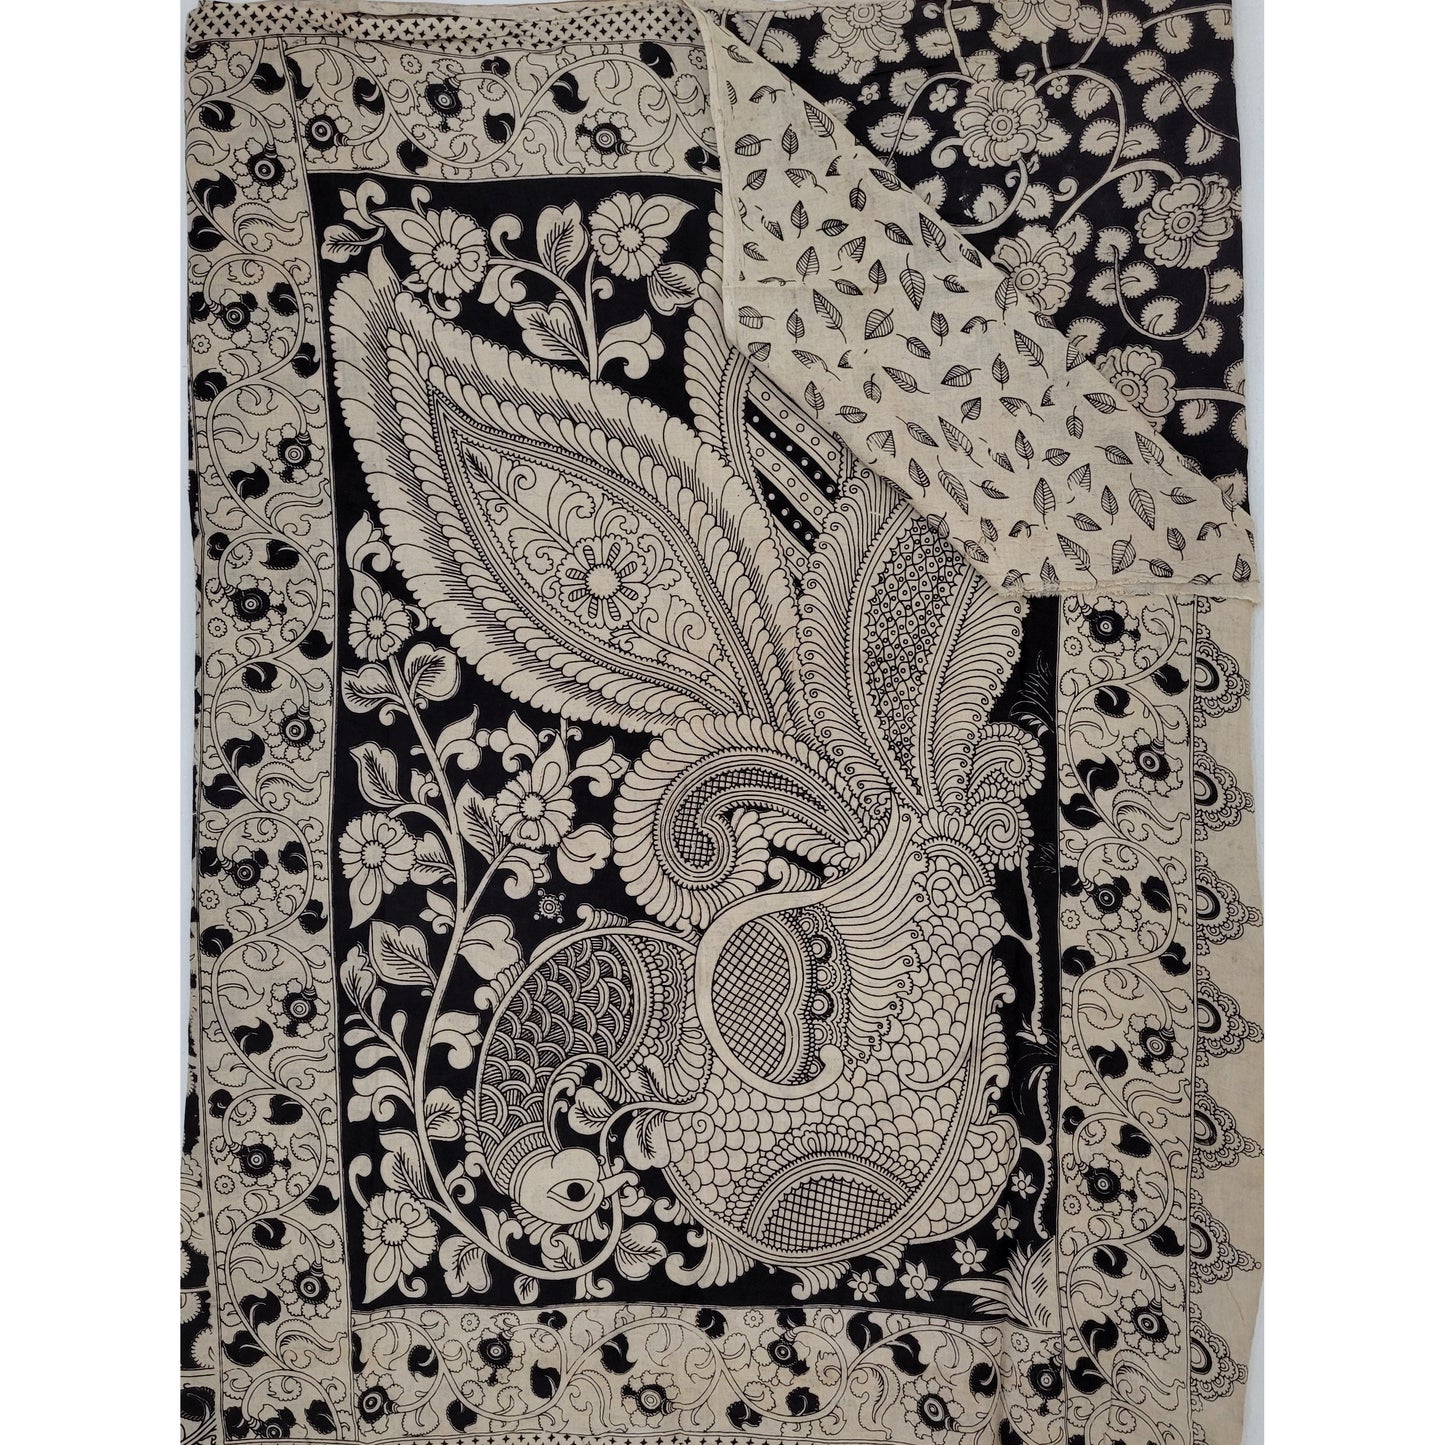 Handprinted Kalamkari Cotton saree - Vinshika